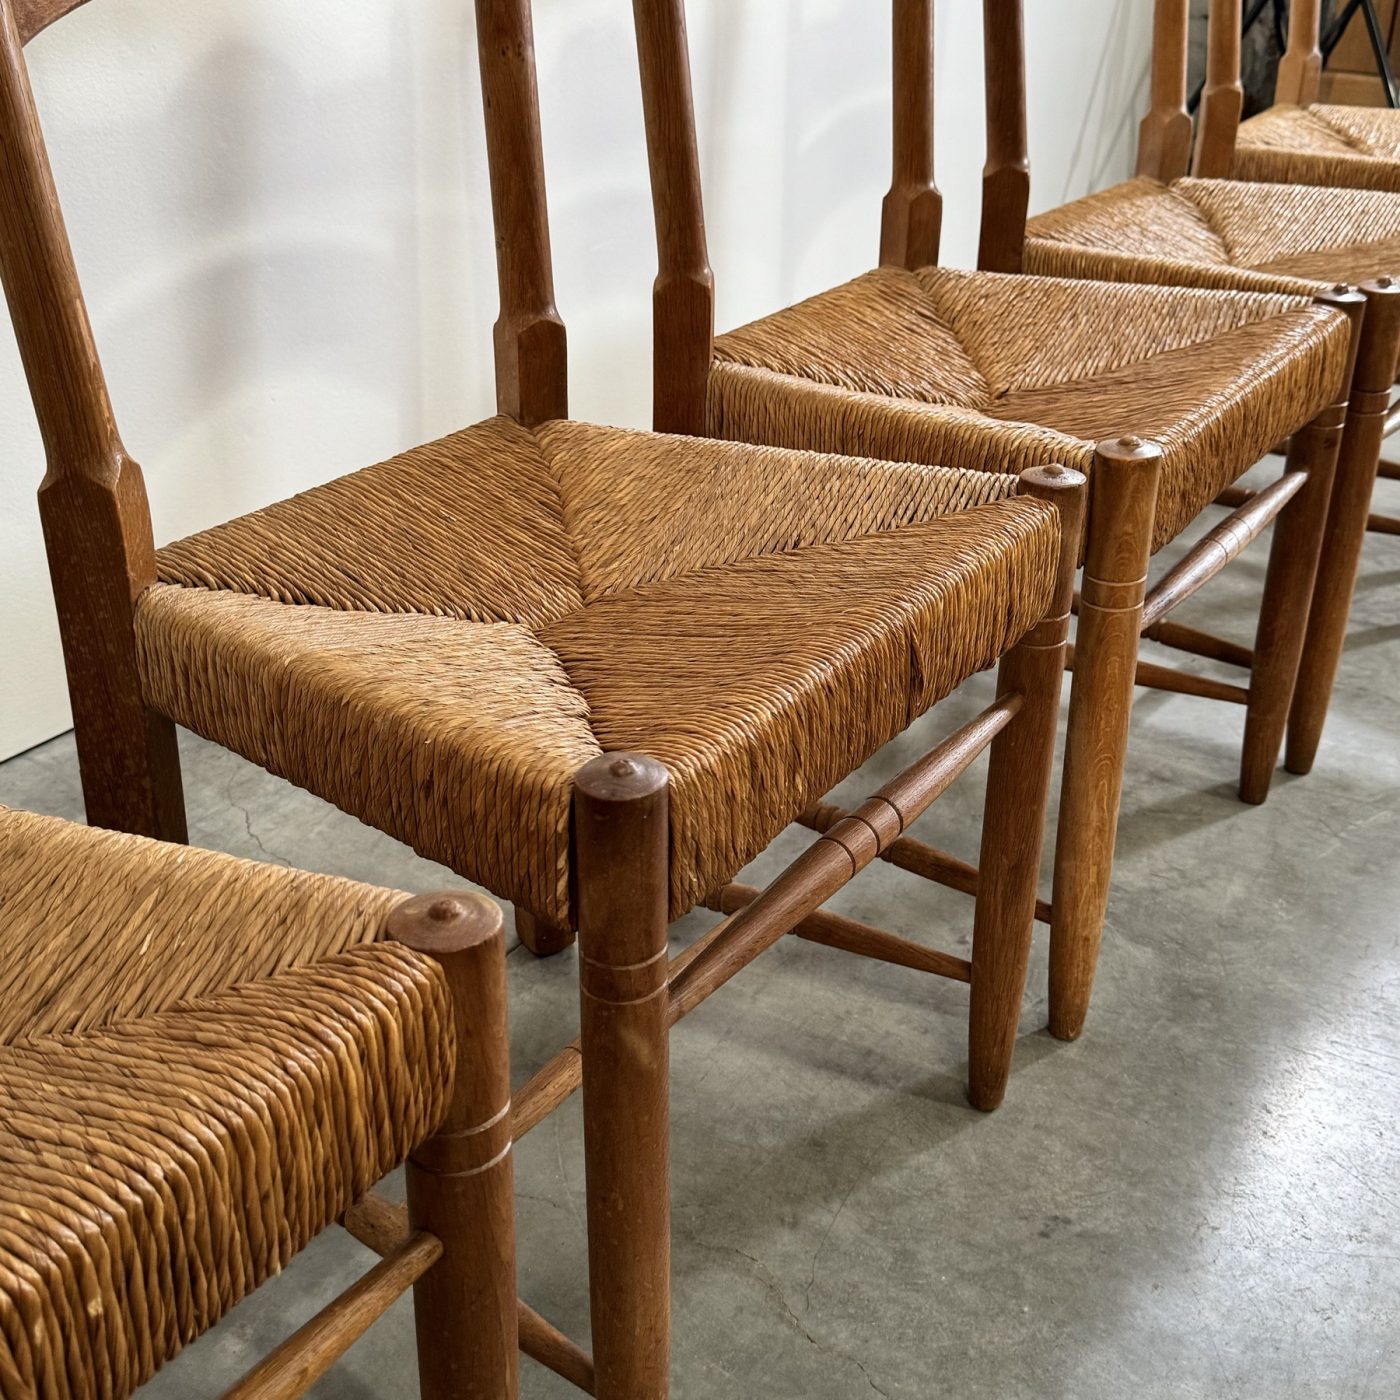 objet-vagabond-rustic-chairs0005